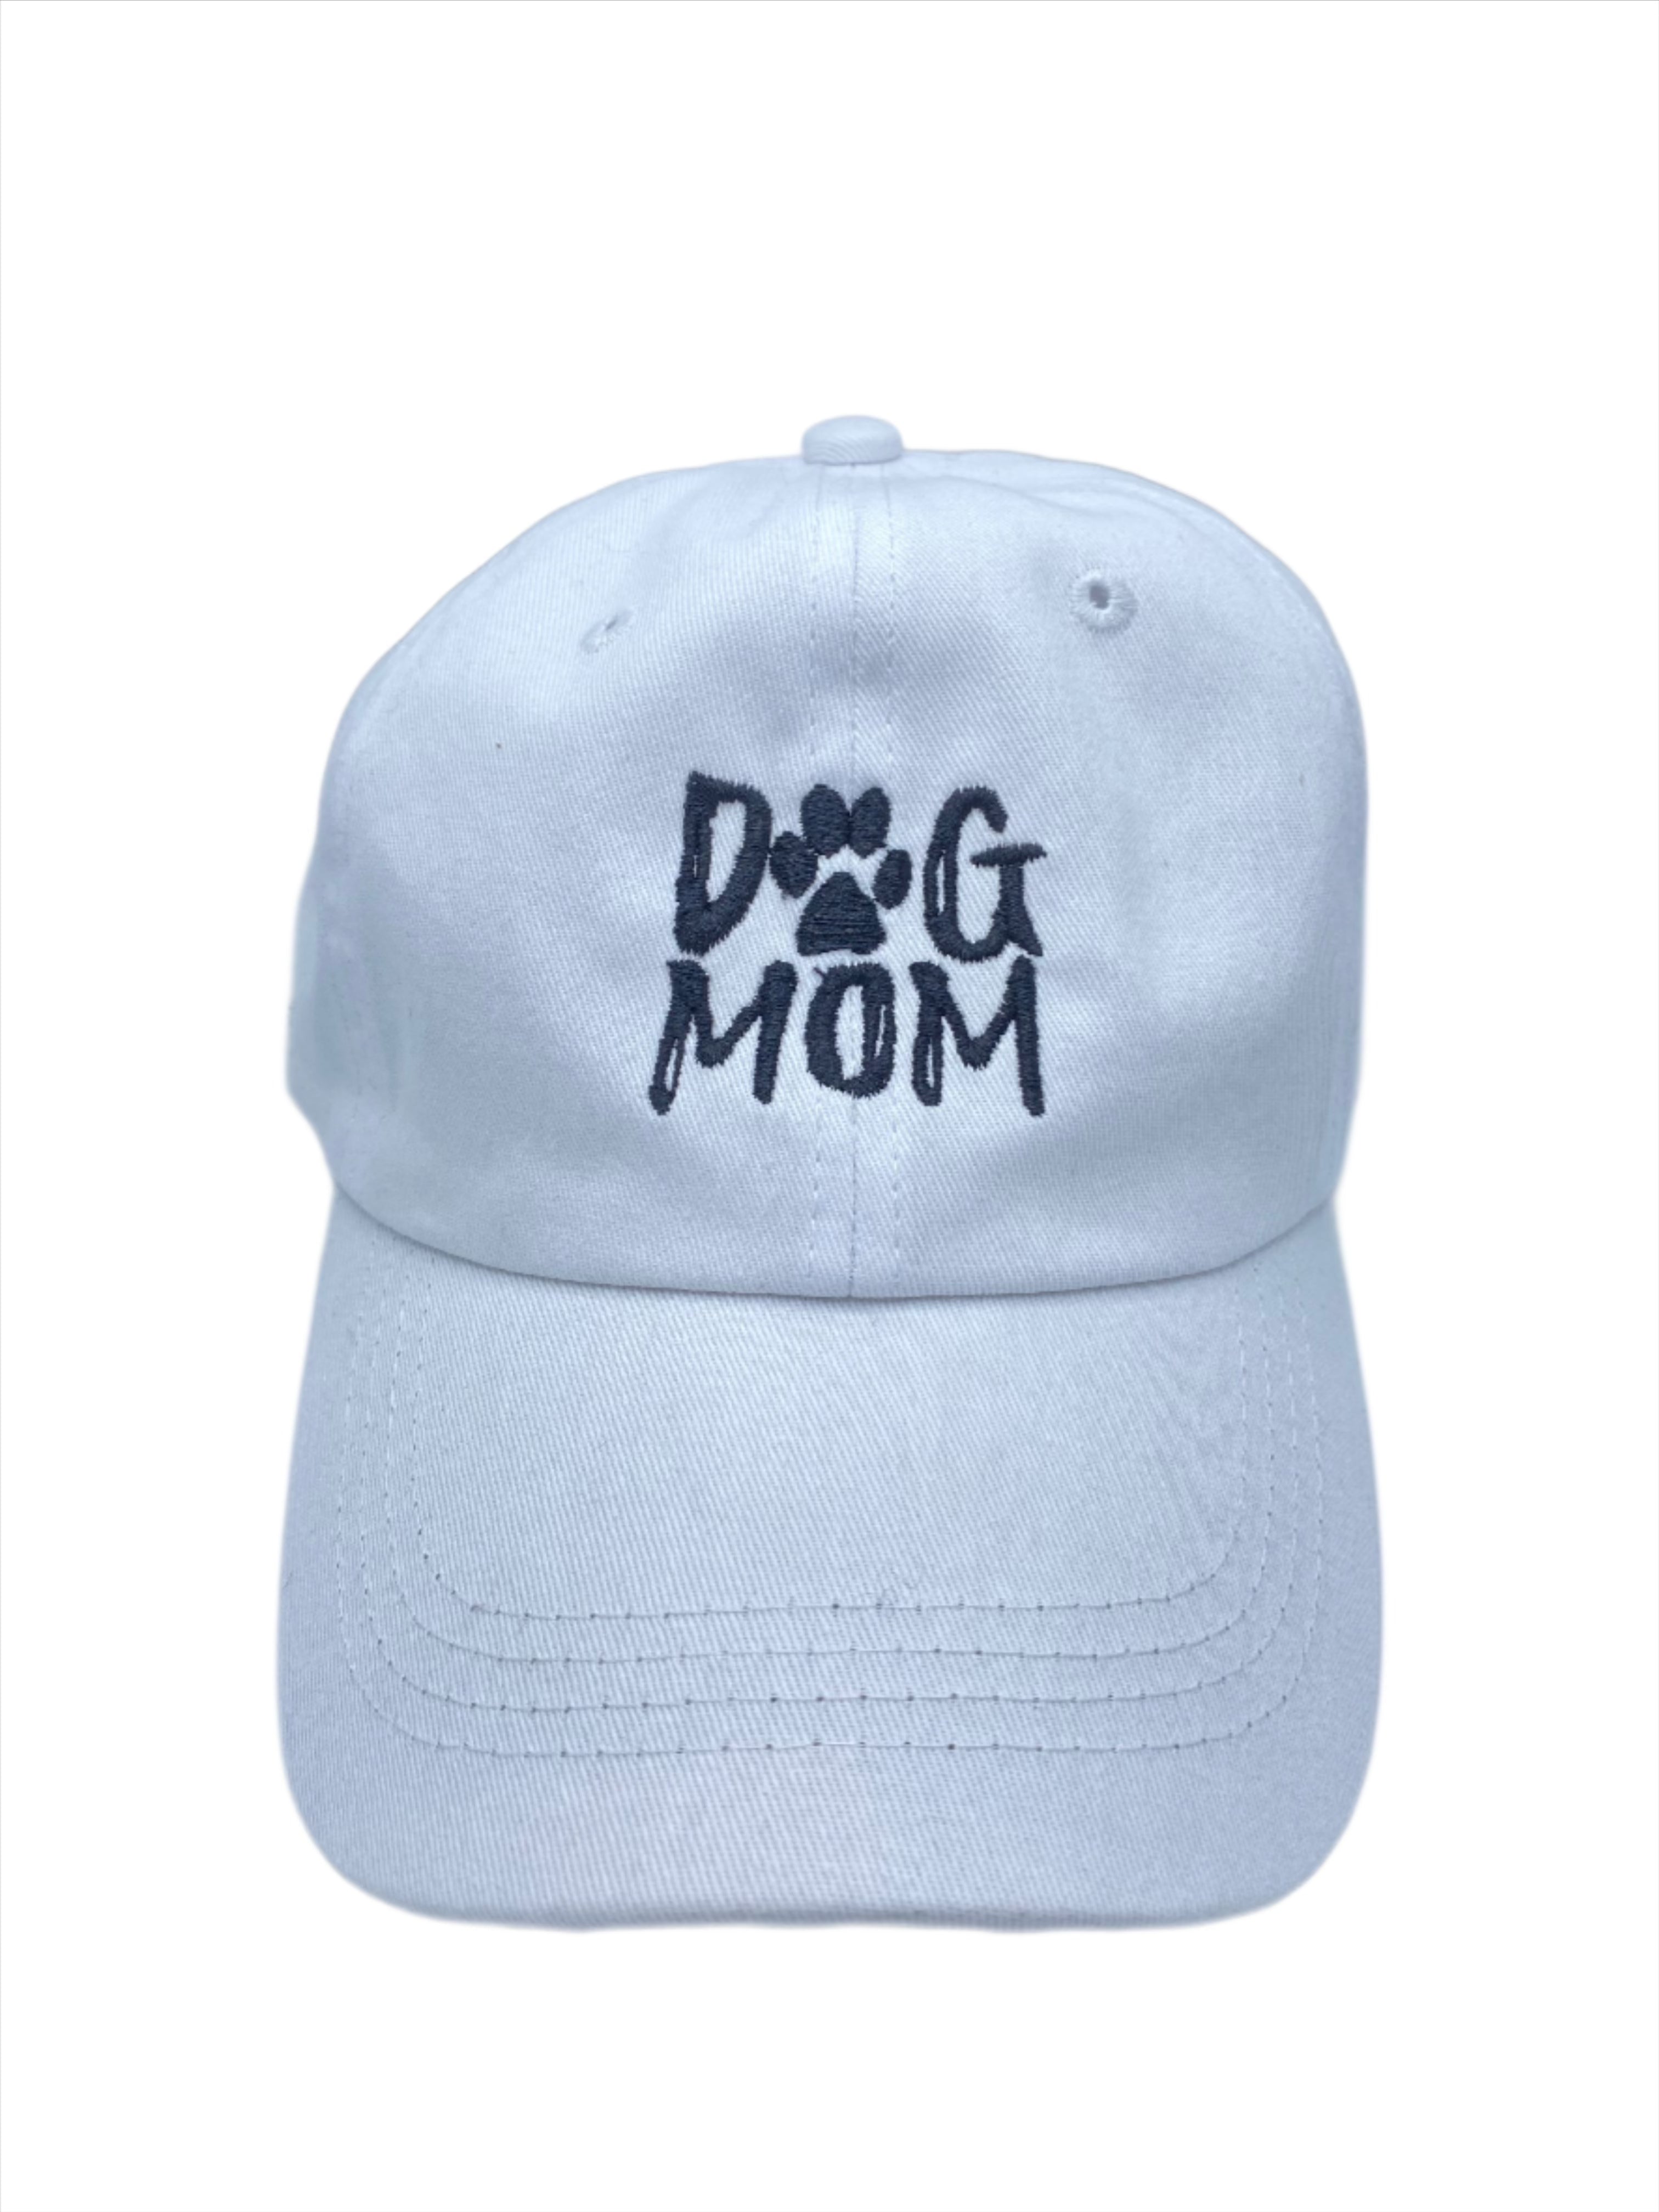 DOG MOM BALL CAP